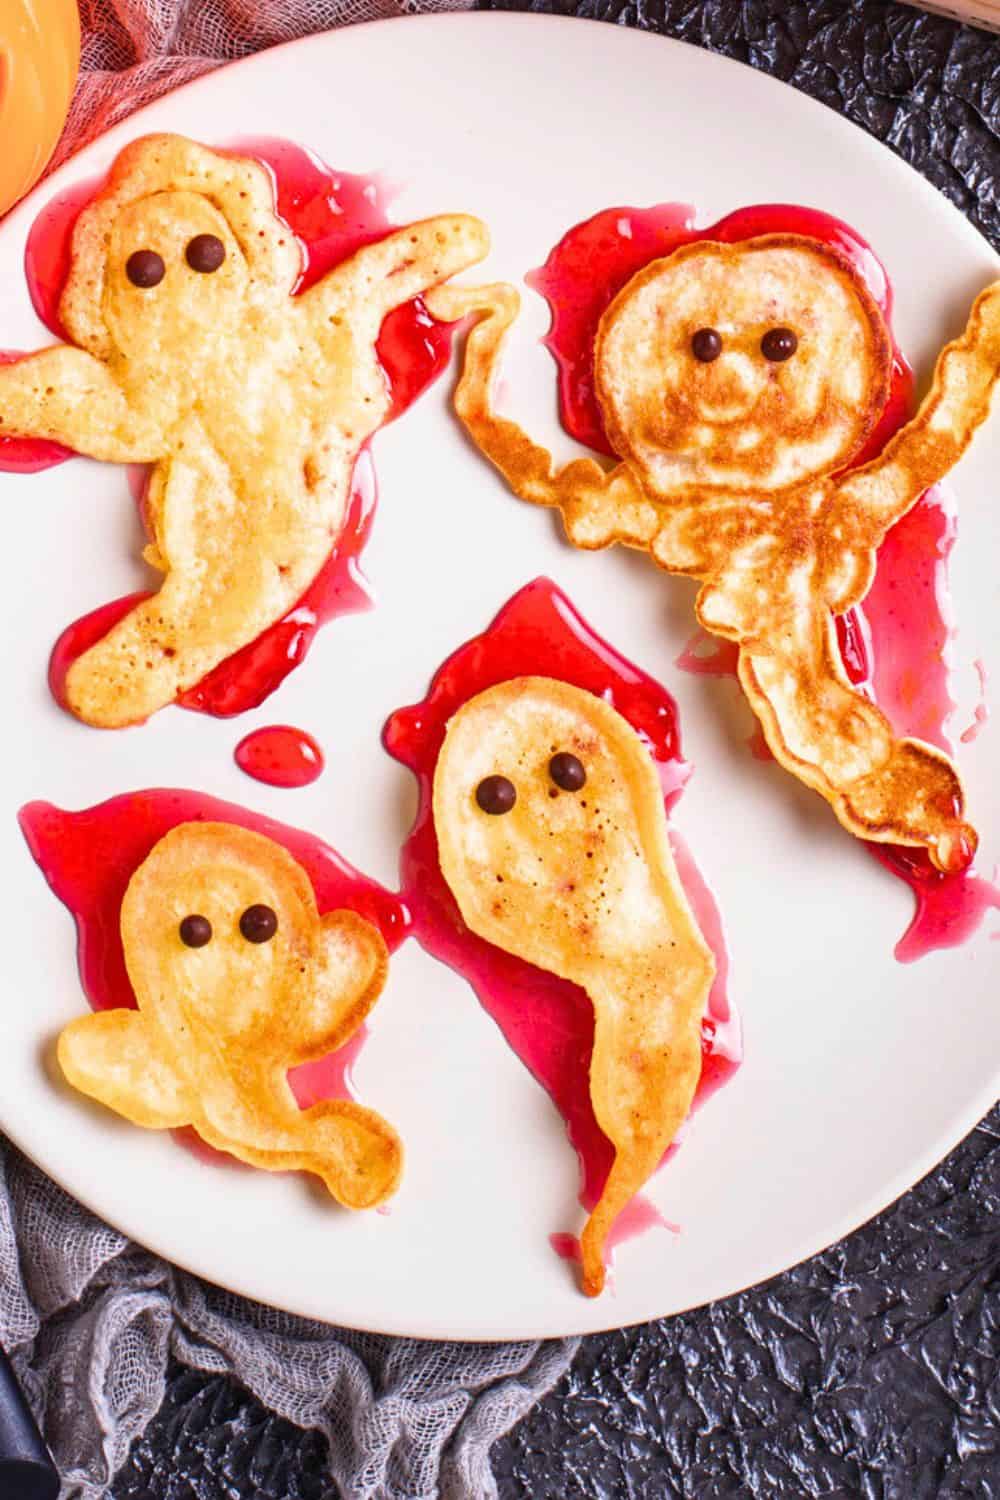 Spooky Breakfast Bites (Spooky Halloween Pancakes) - Halloween ghost pancakes on top of strawberry syrup